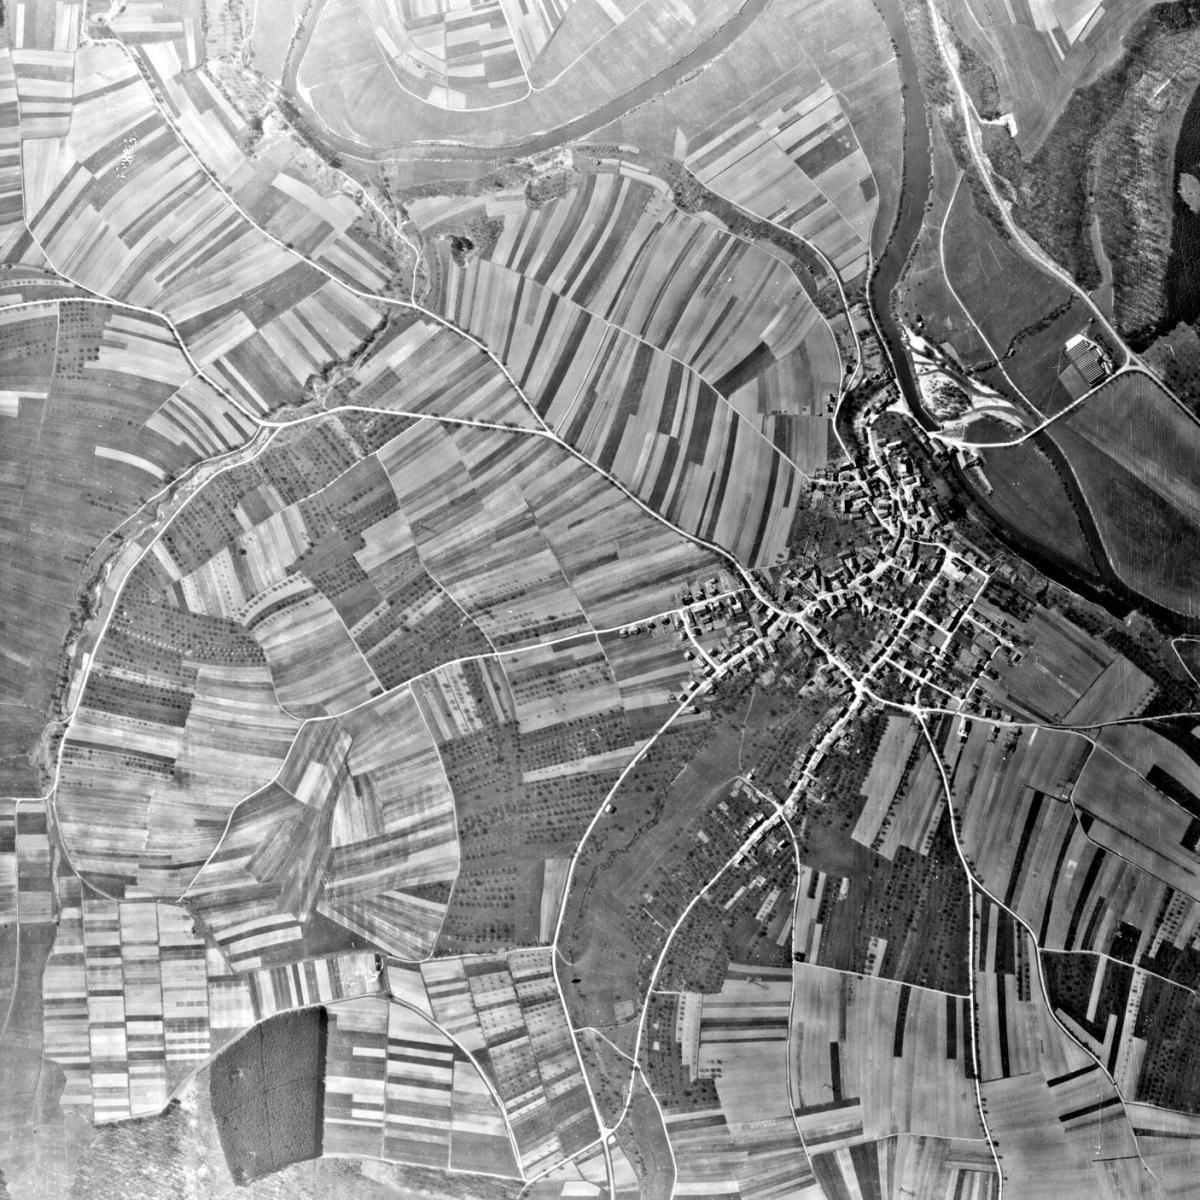 1945: Luftbild im Maßstab 1:11000 (Quelle: Frank Eberle)